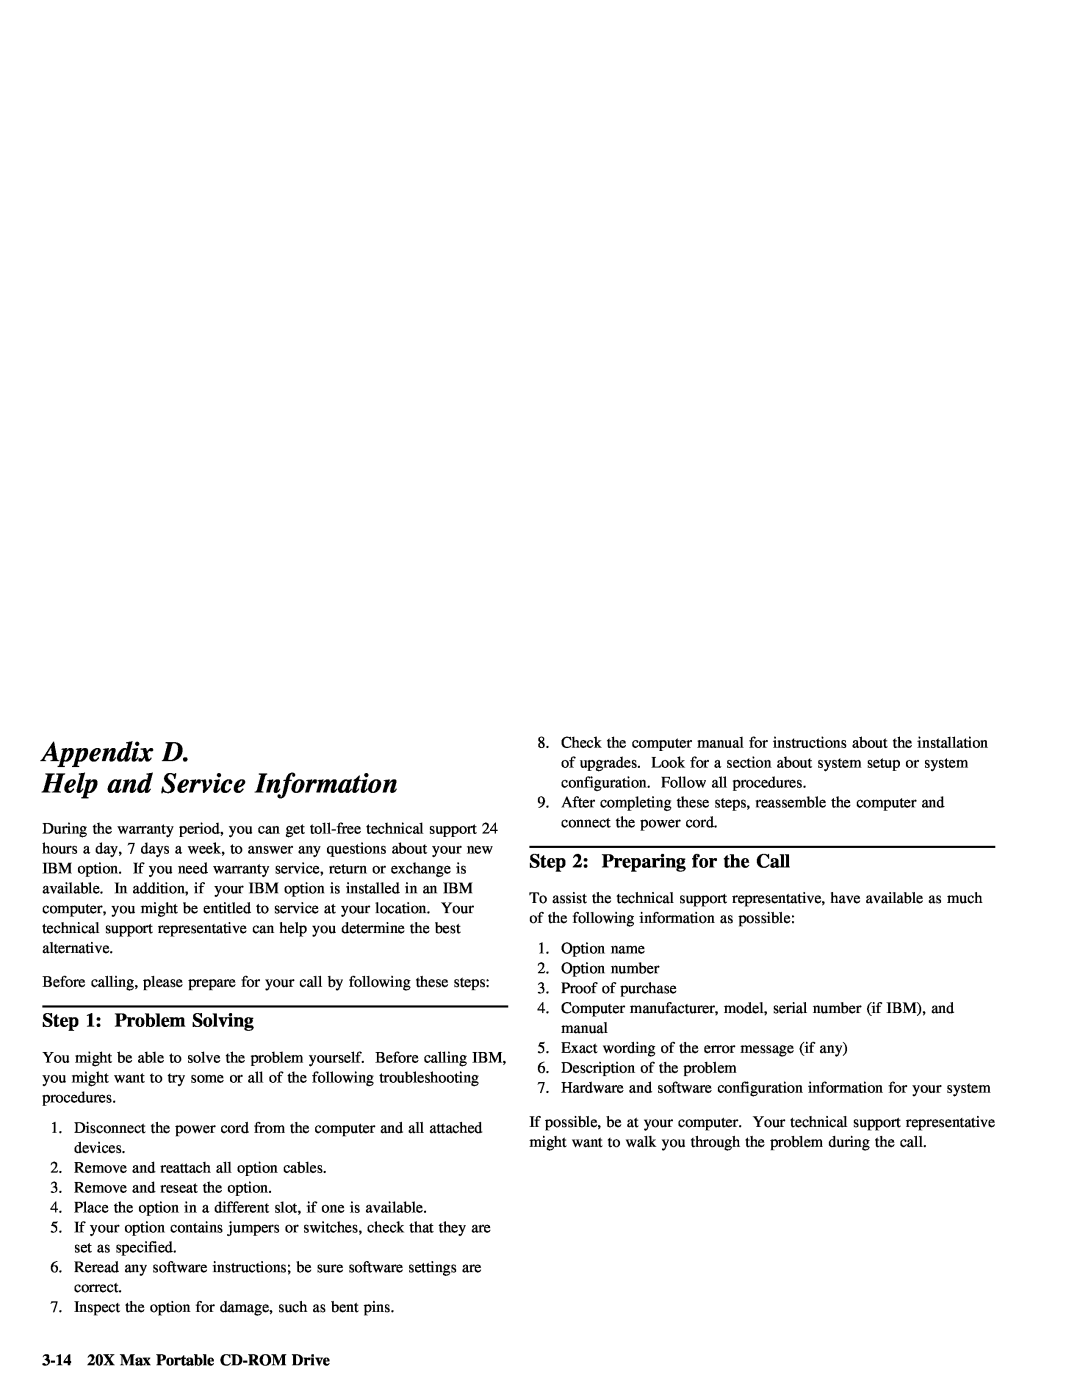 Lenovo 4304493 manual Service, Appendix D, Step, Call, Help, Information, 3-14 20X Max Portable CD-ROM Drive 